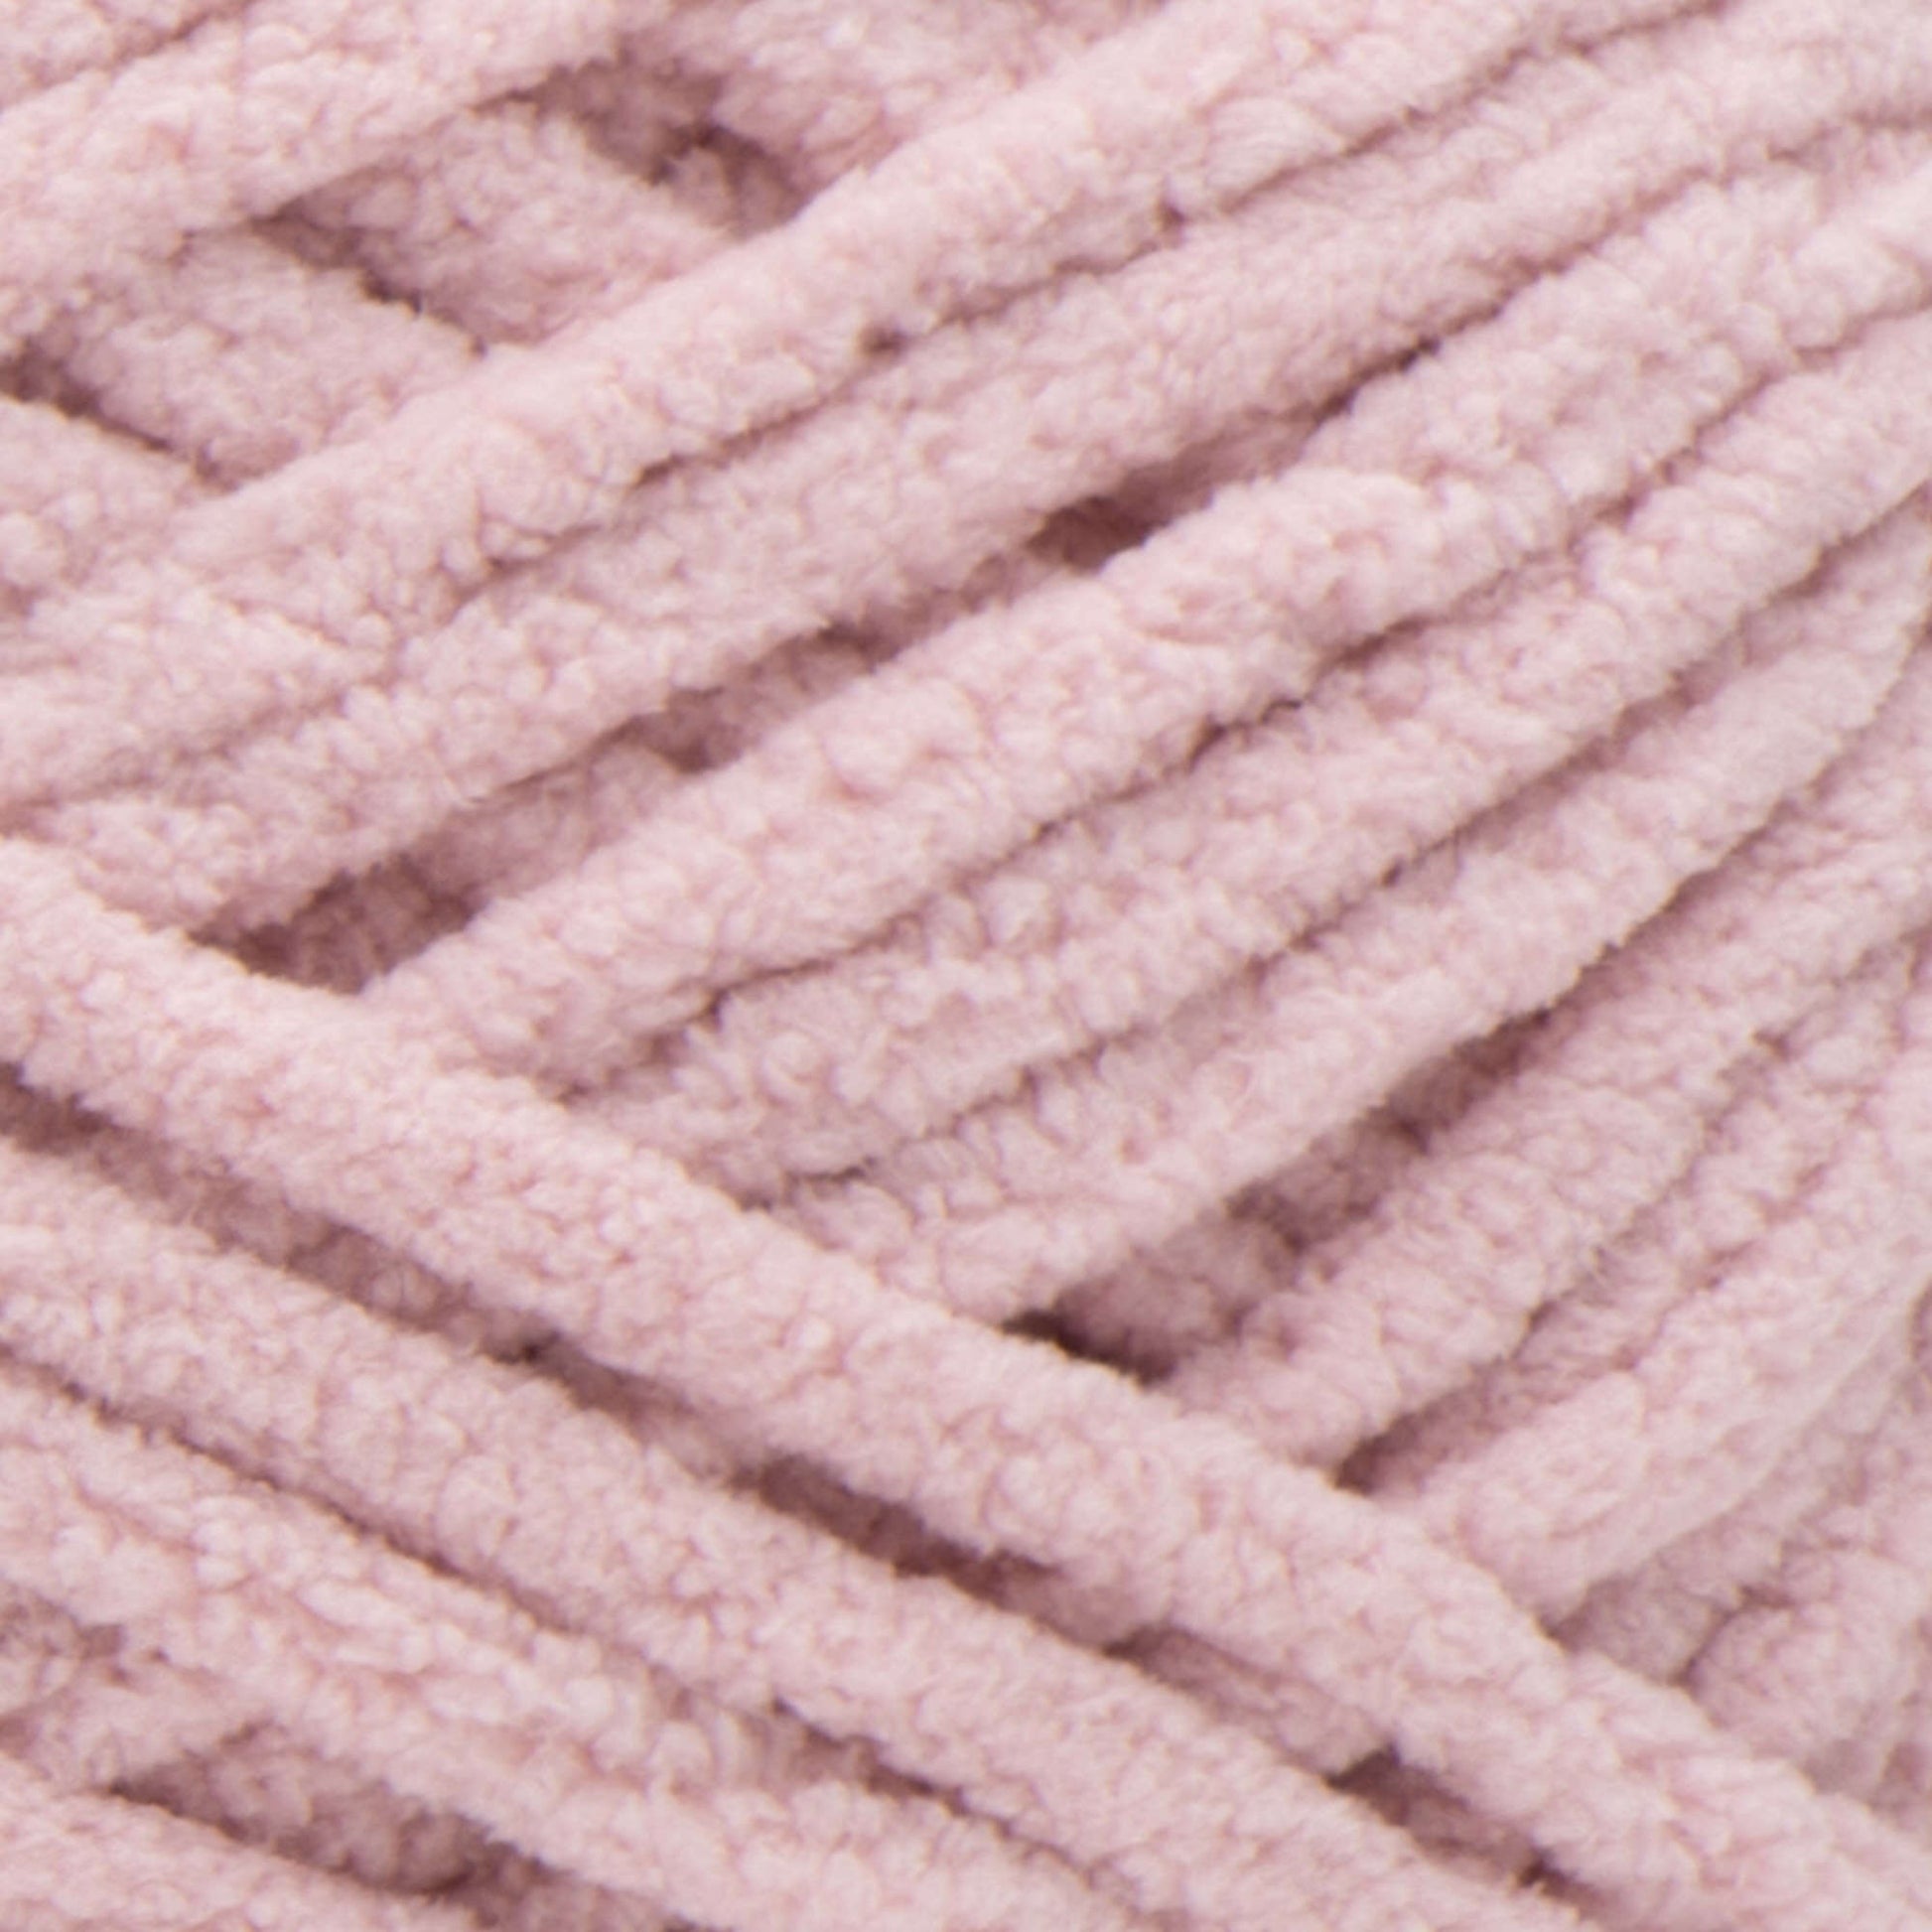 Bernat Blanket Yarn (300g/10.5oz) Tan Pink